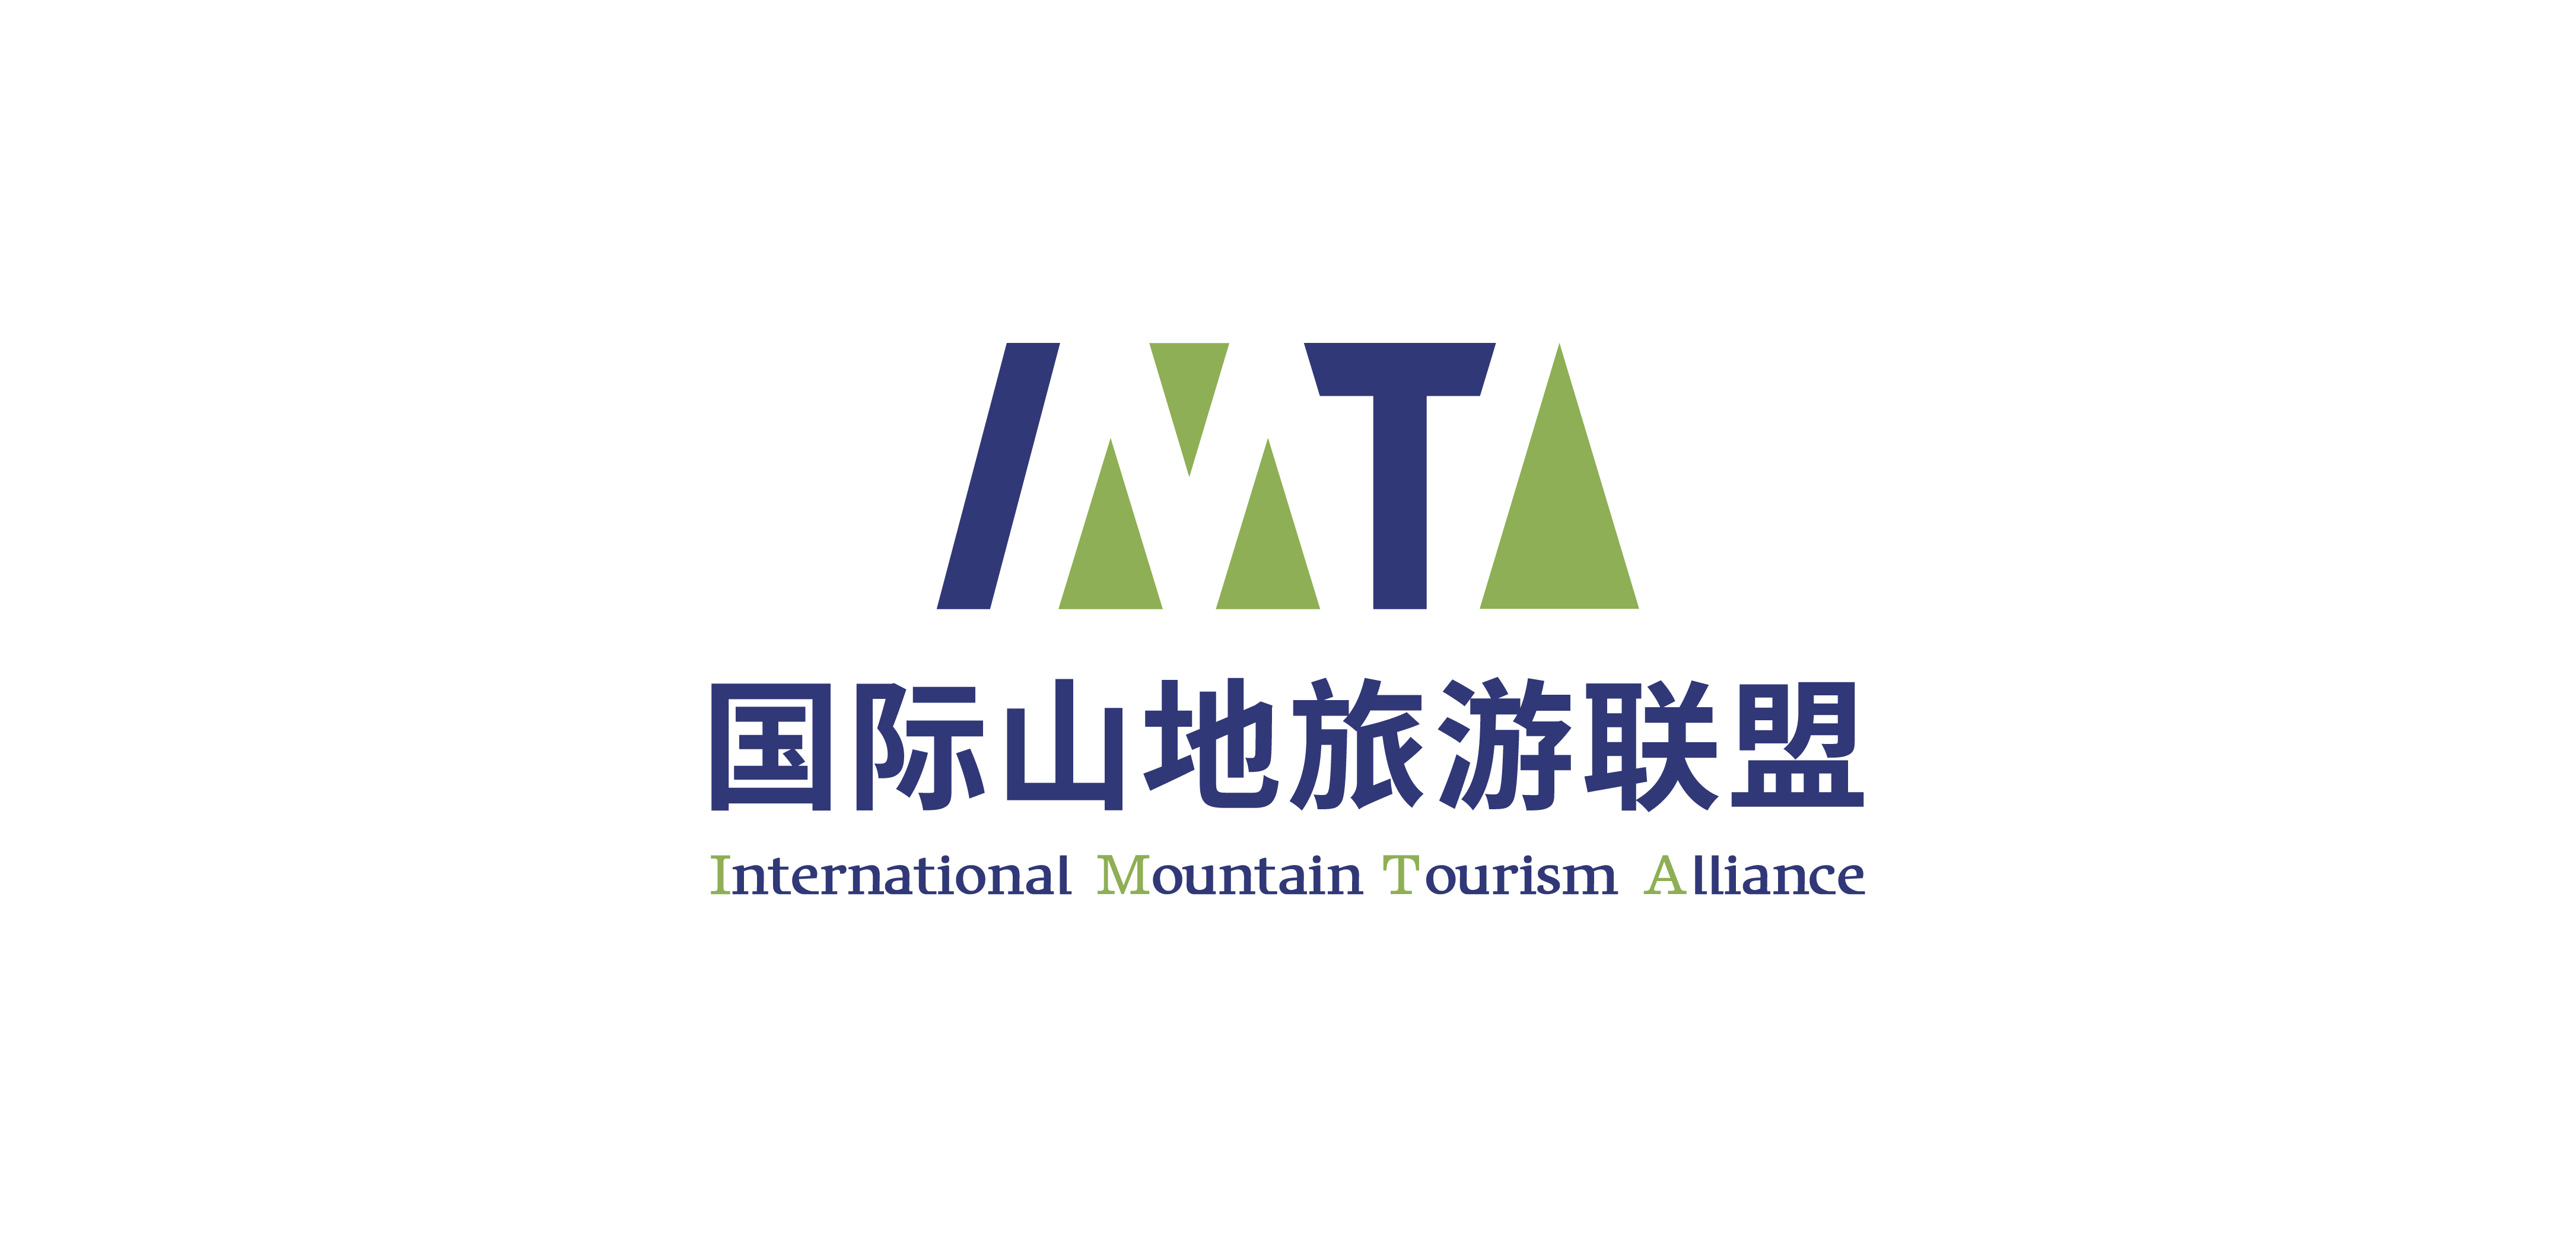 GTEF website logo_IMTA